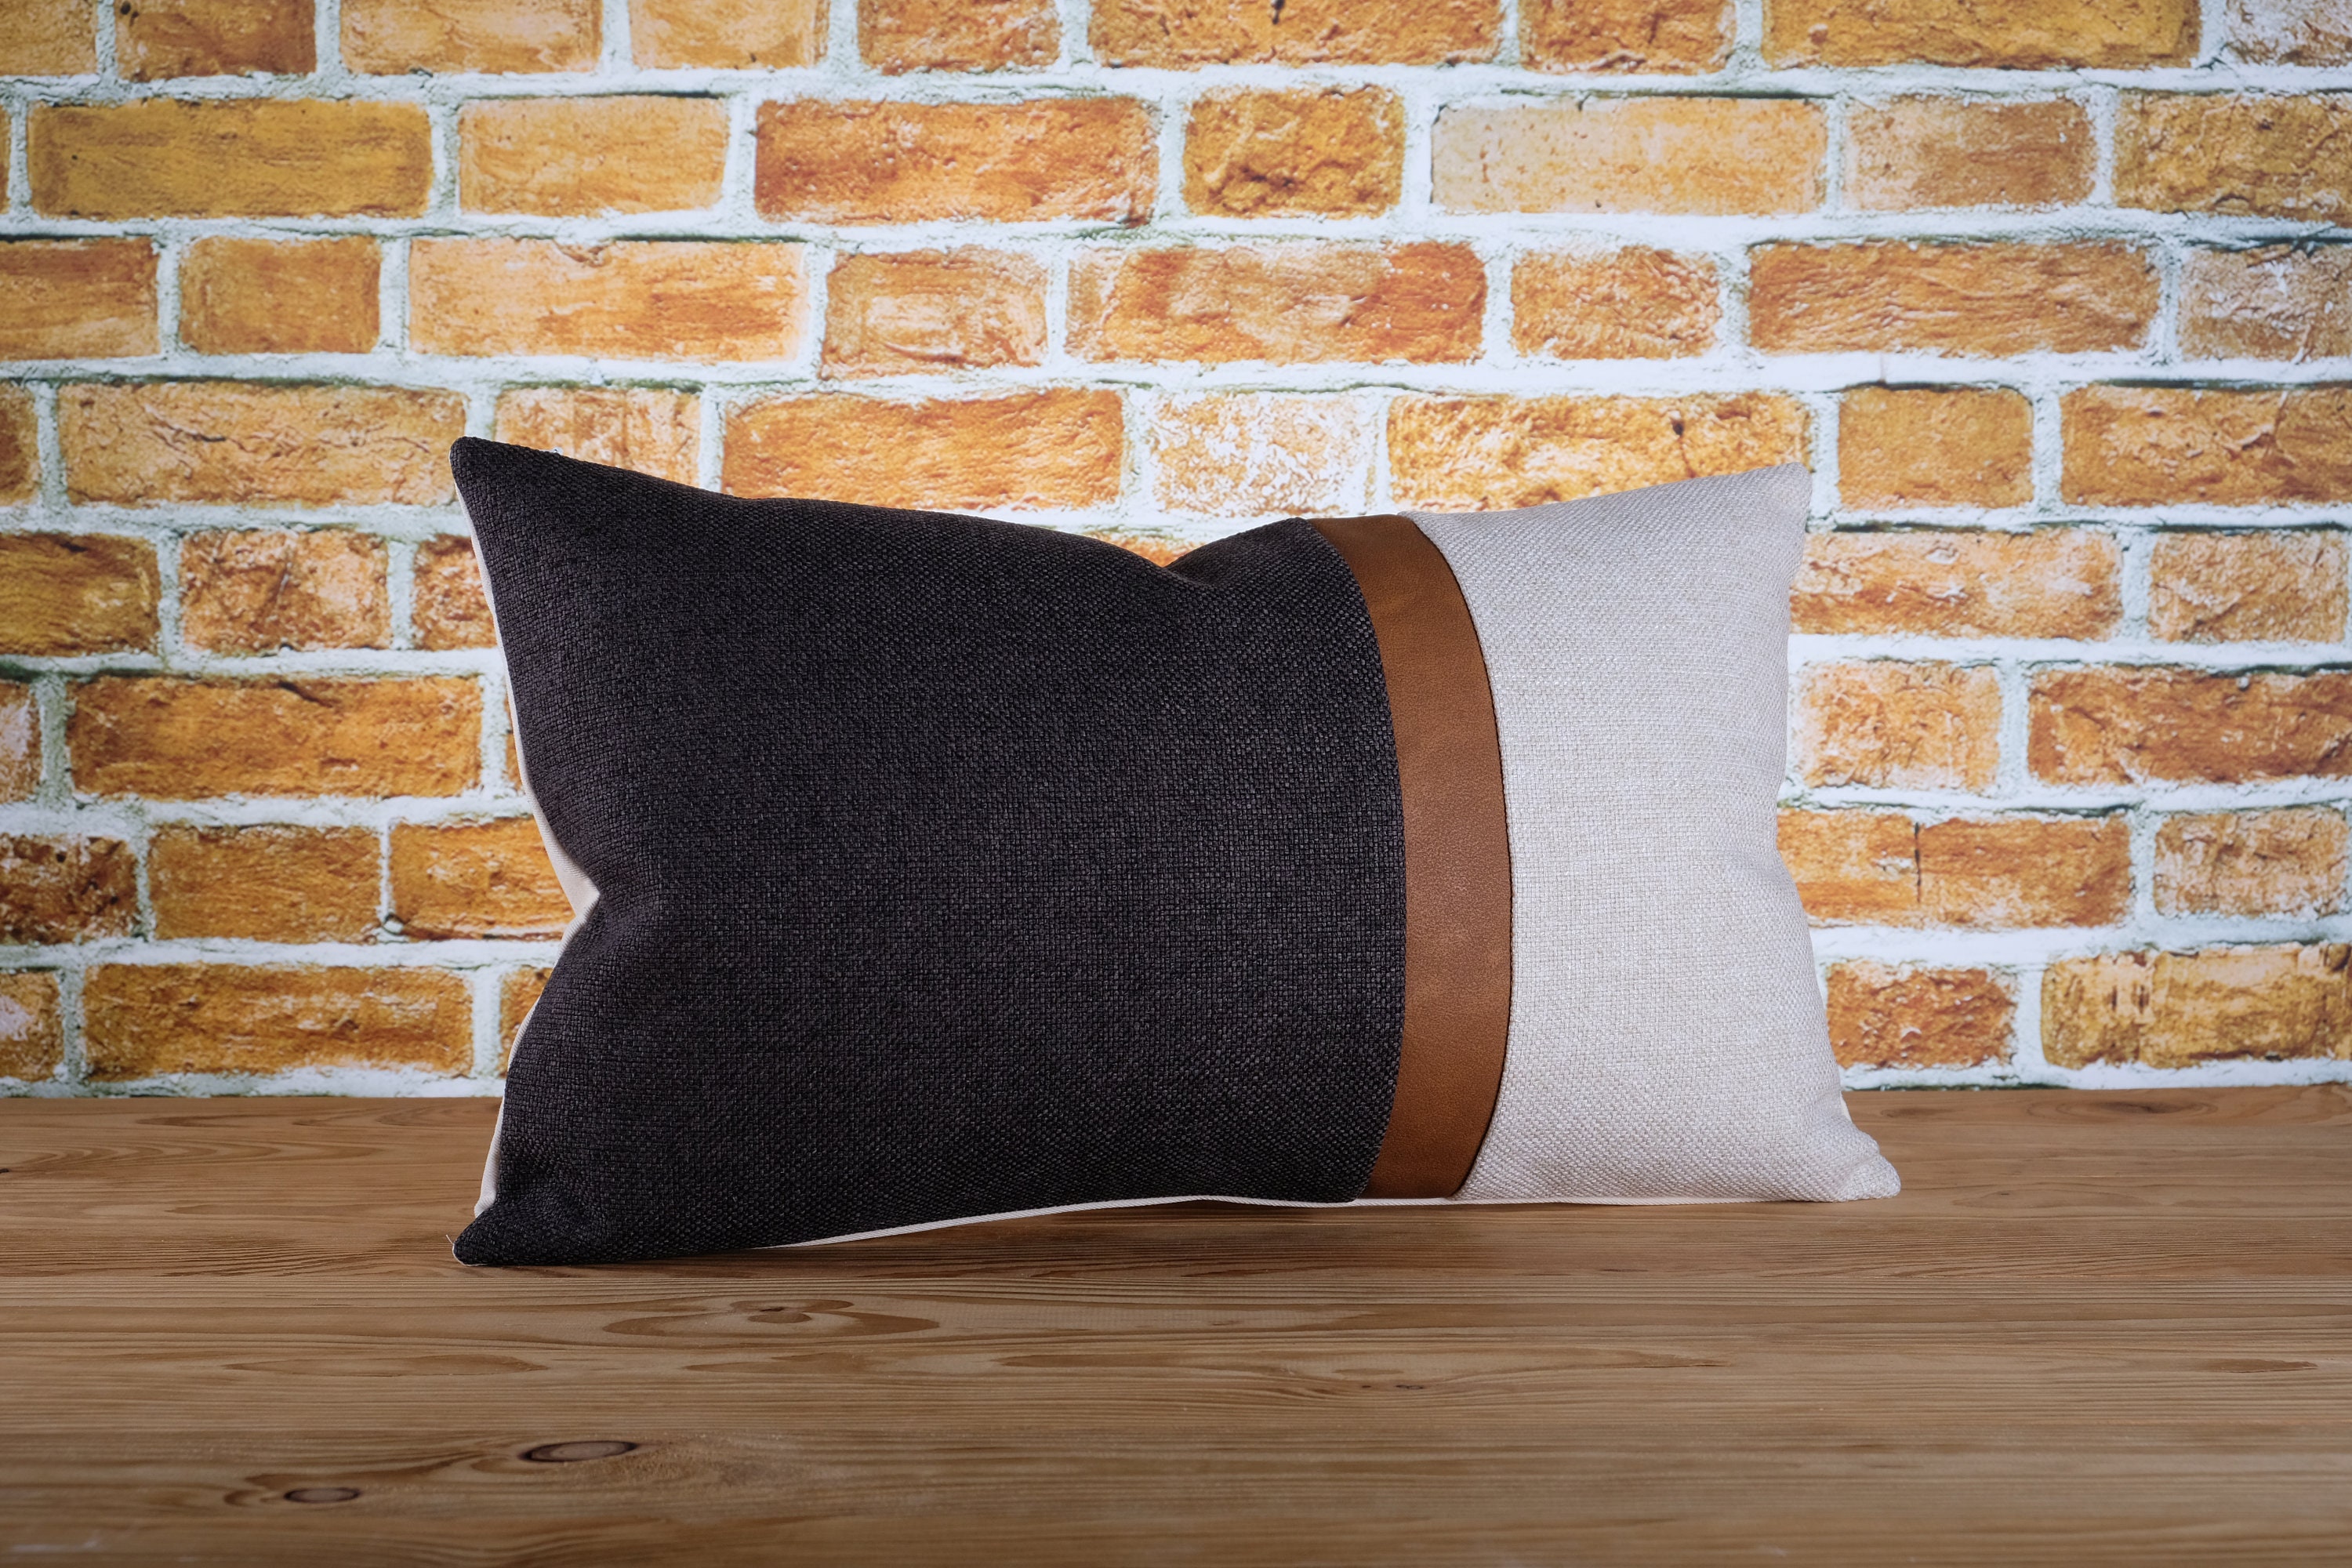 Throw Pillow Covers 20 x 20 Inch Farmhouse Pillow Covers,Cotton Tan Faux  Leather Lumbar Home Decorative Pillow Case, Set of 2 Khaki Stripes Textured